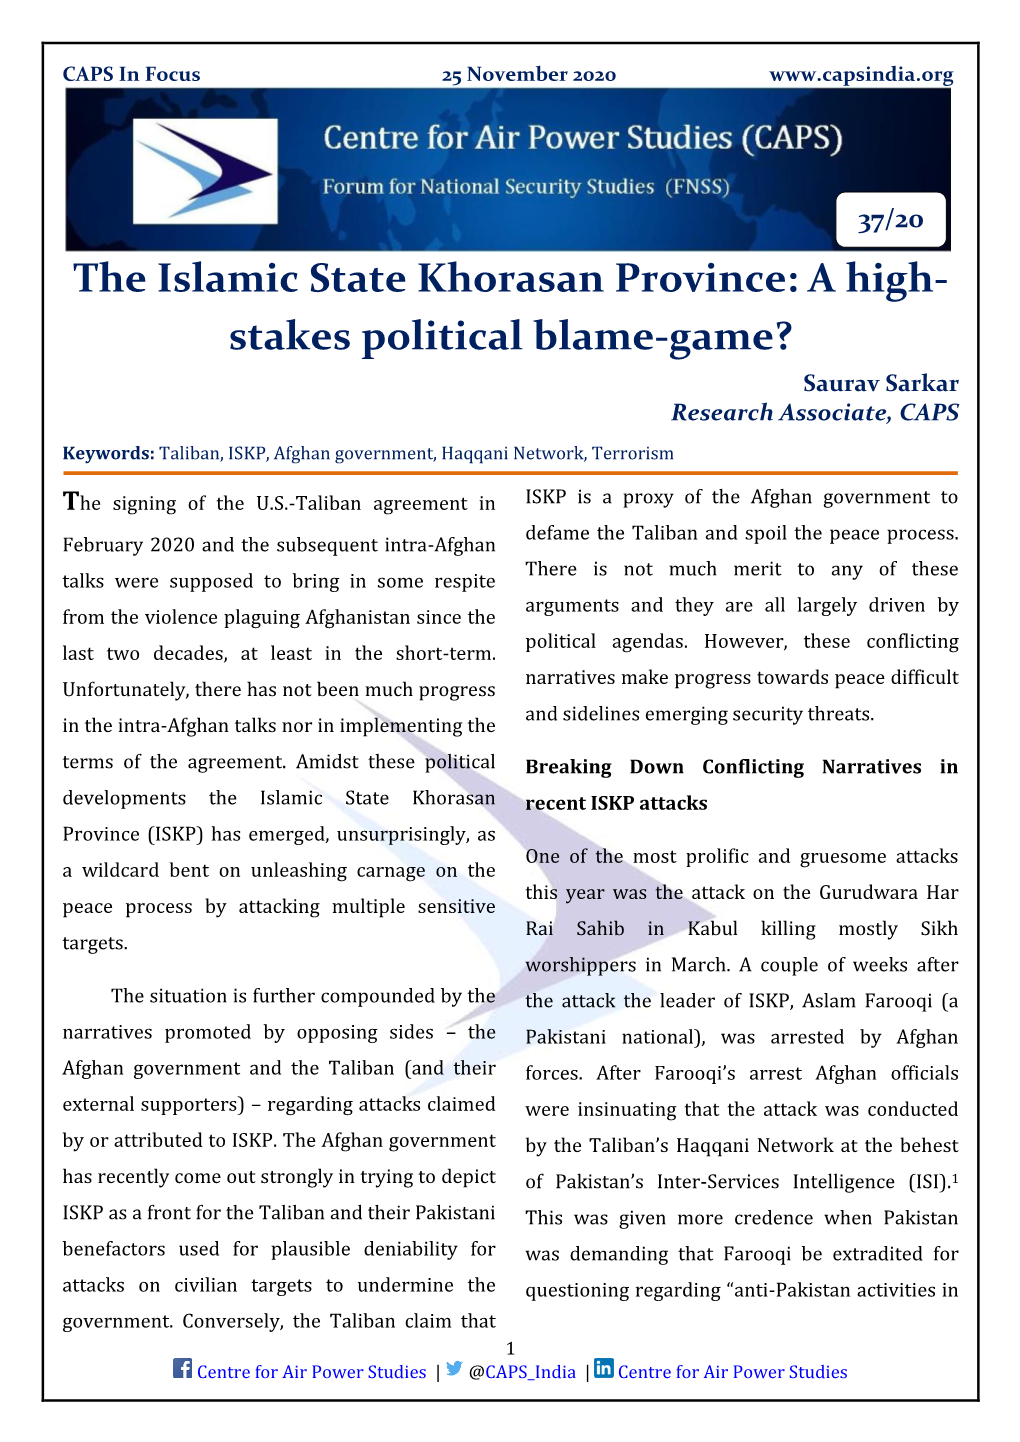 The Islamic State Khorasan Province: a High- Stakes Political Blame-Game? Saurav Sarkar Research Associate, CAPS